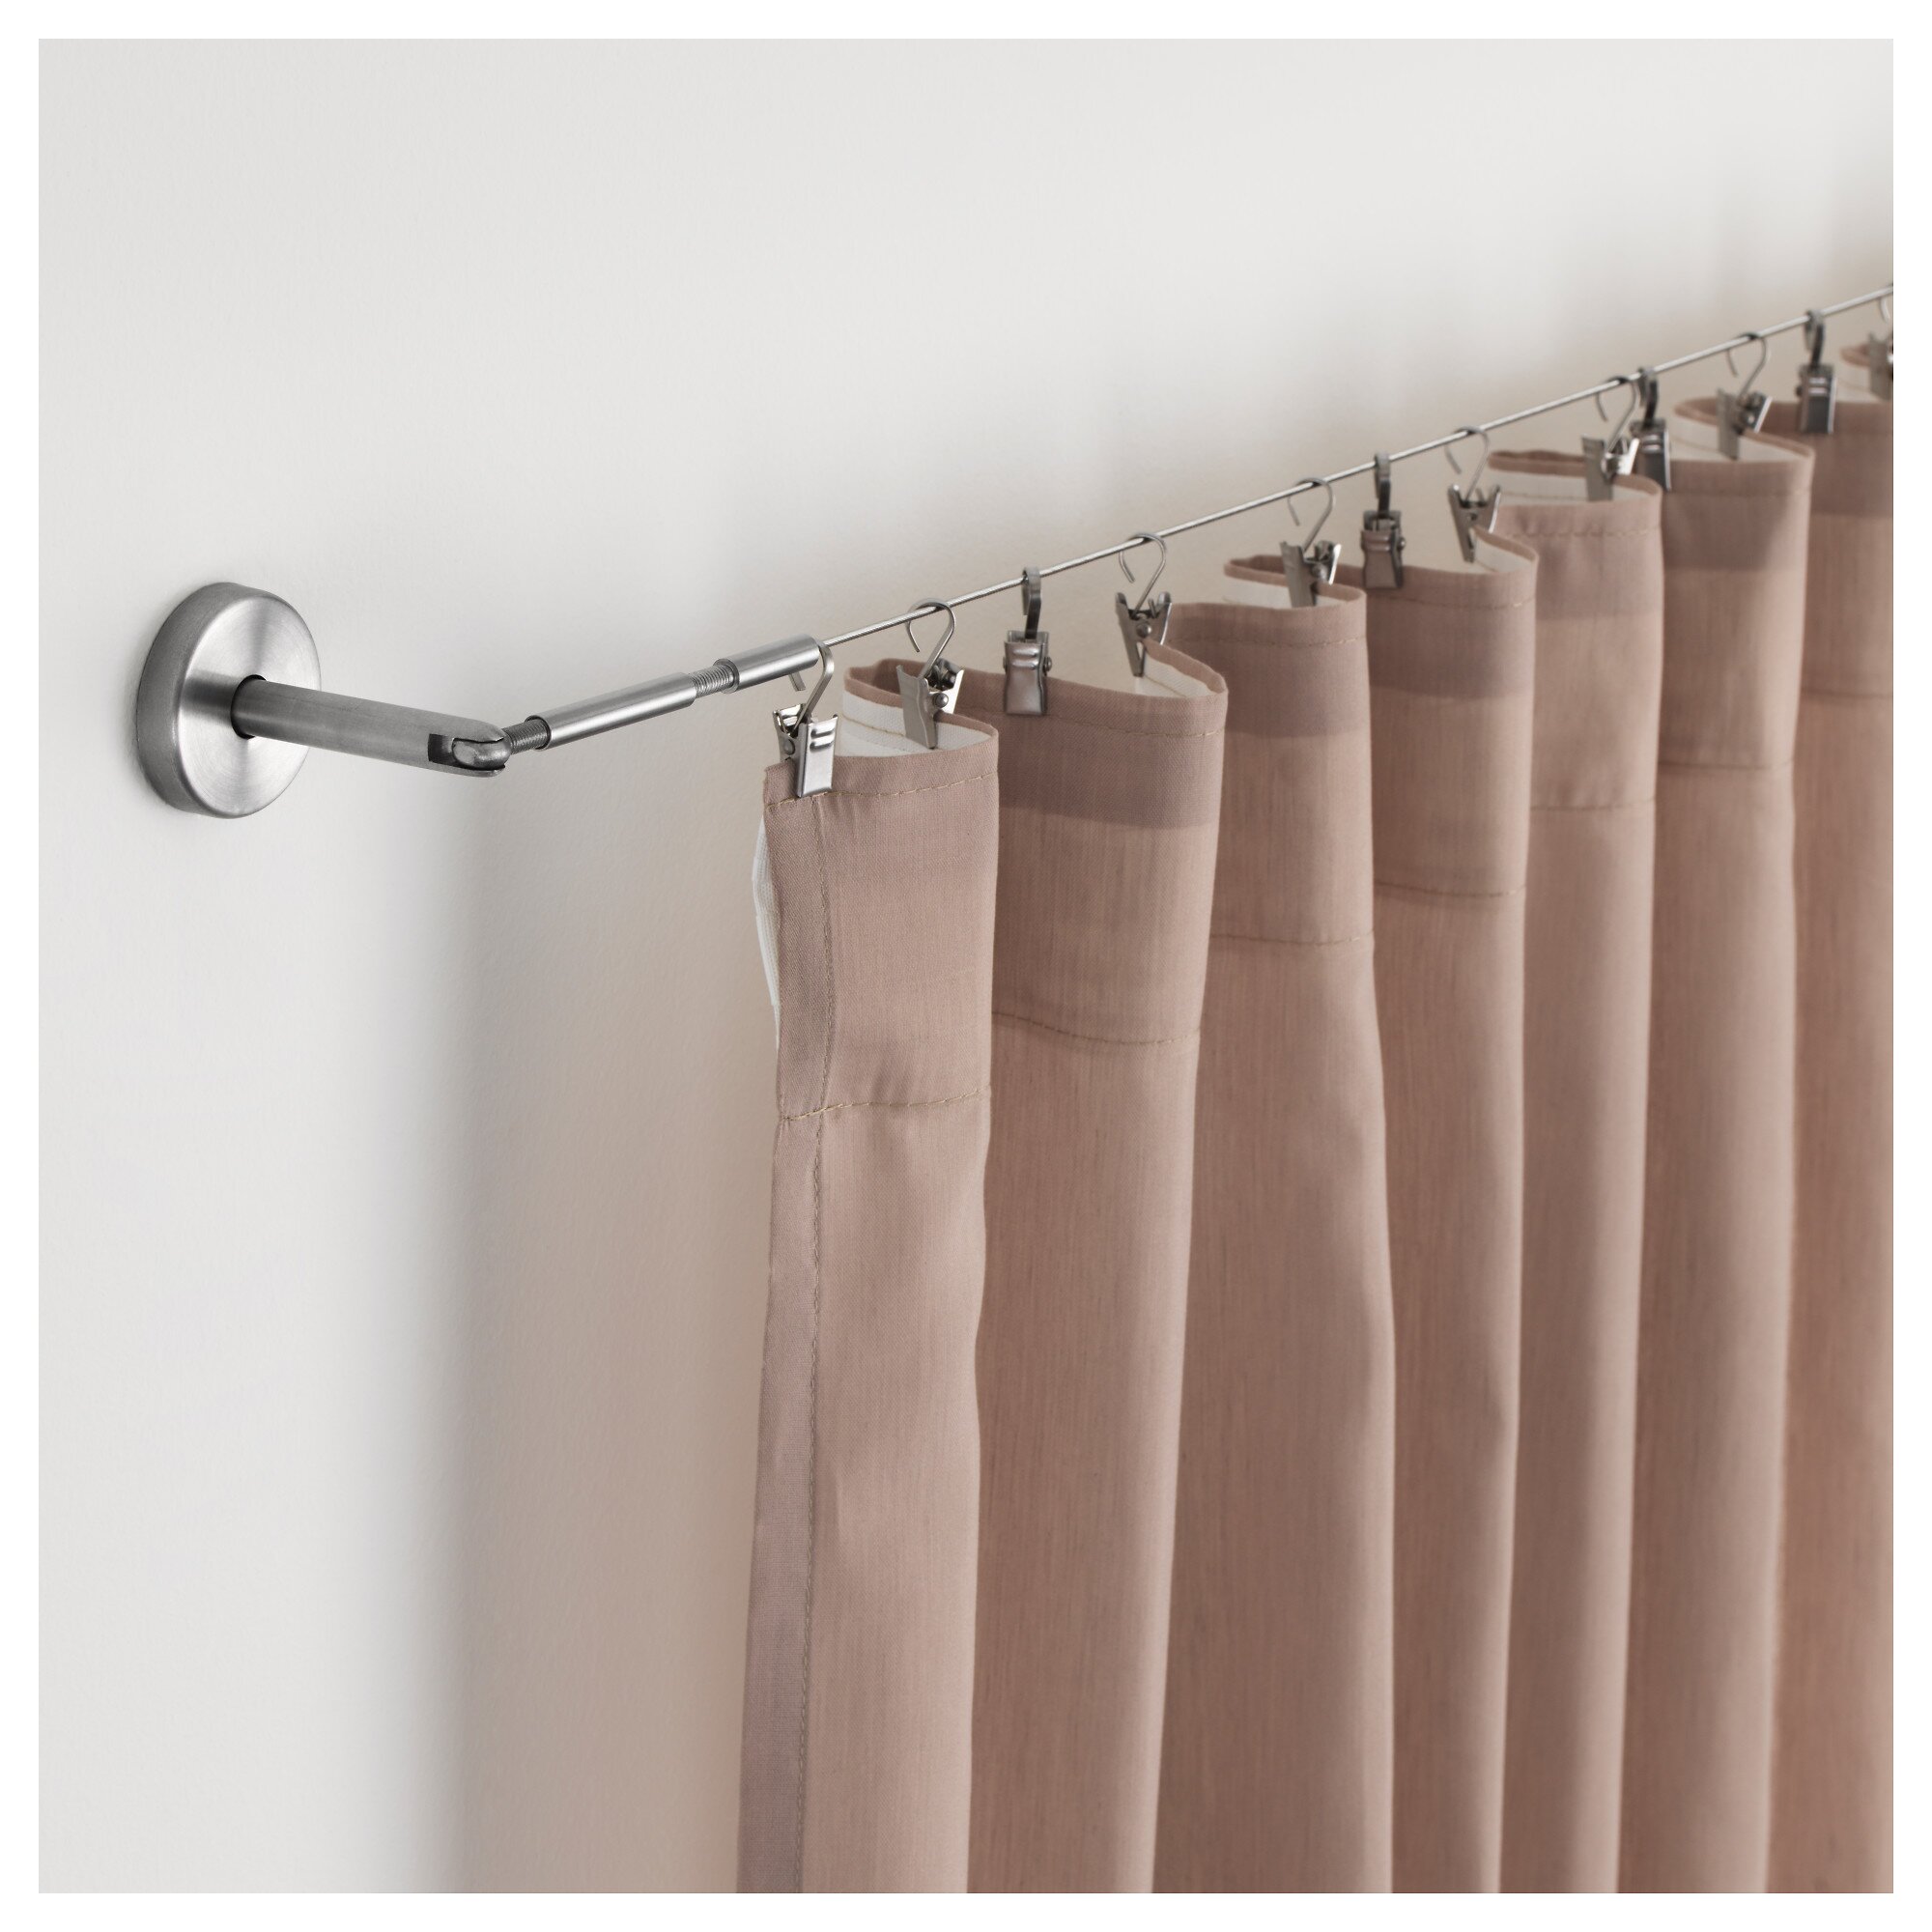 Ikea Shower Curtain for Best Your Bathroom Decoration: Ikea Shower Curtain Liner | Shower Curtain Turquoise | Ikea Shower Curtain